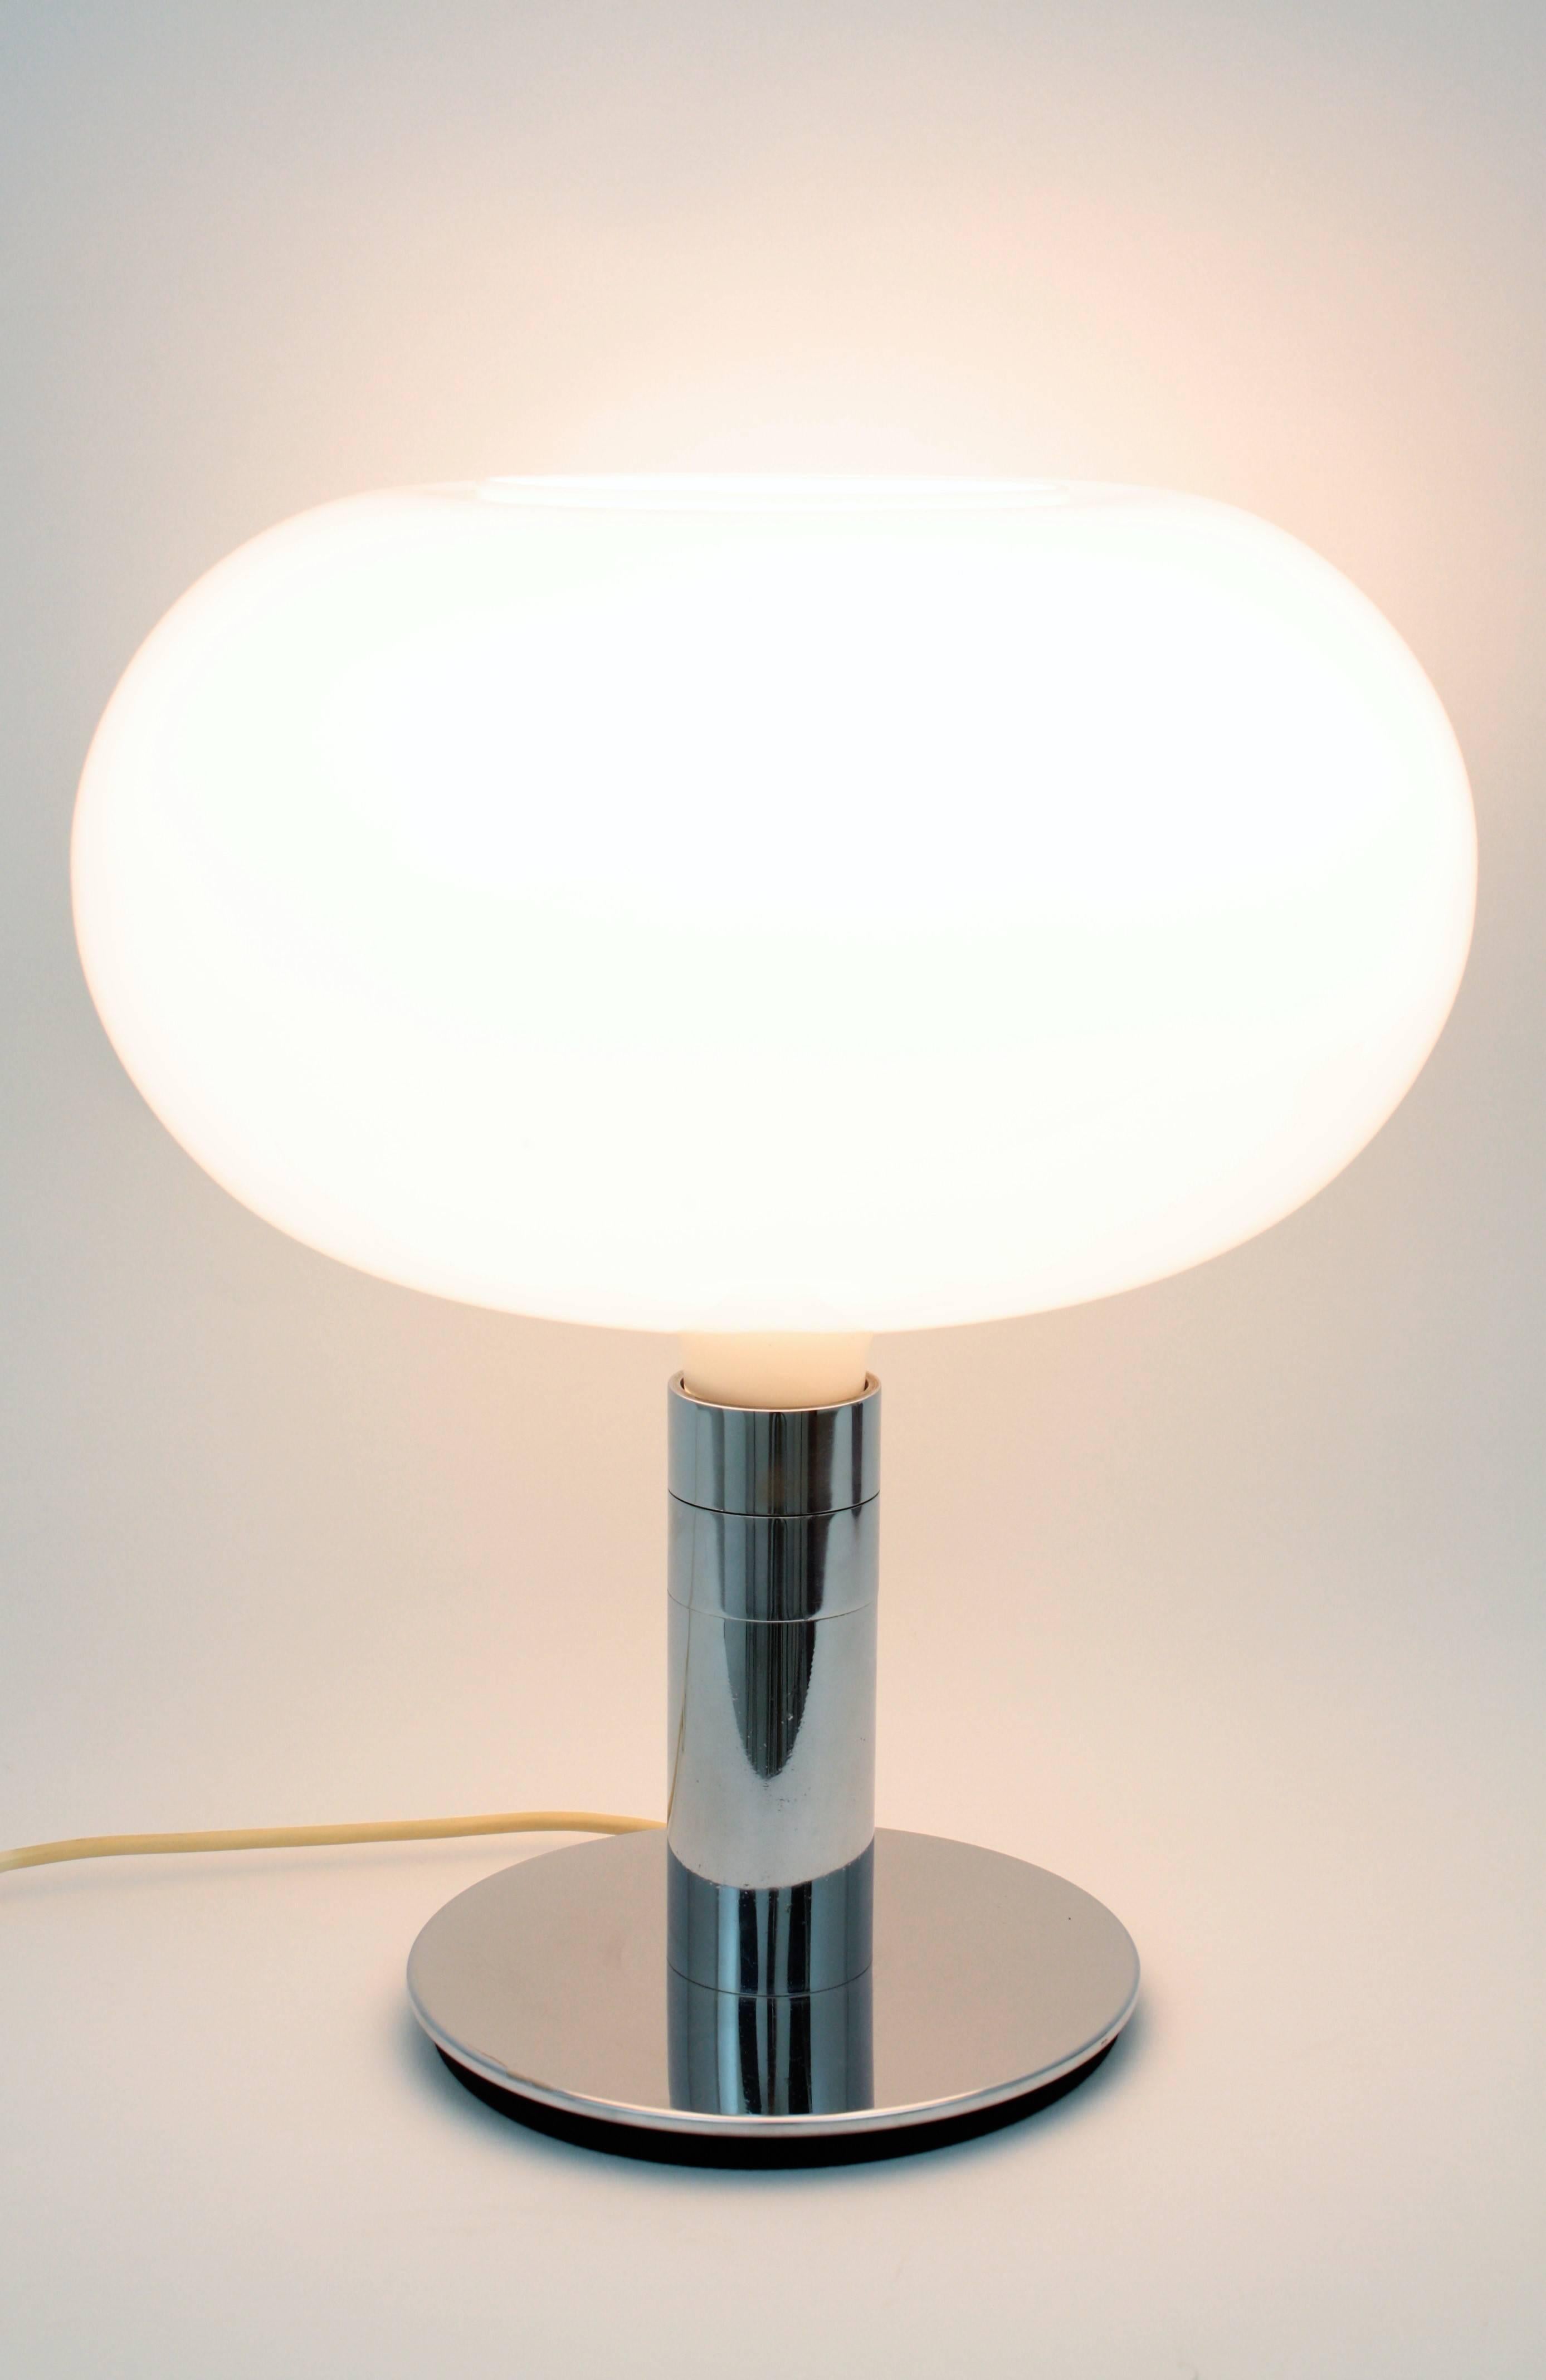 Italian Franco Albini Franca Helg for Sirrah AM/AS Glass and Chrome Table Lamp For Sale